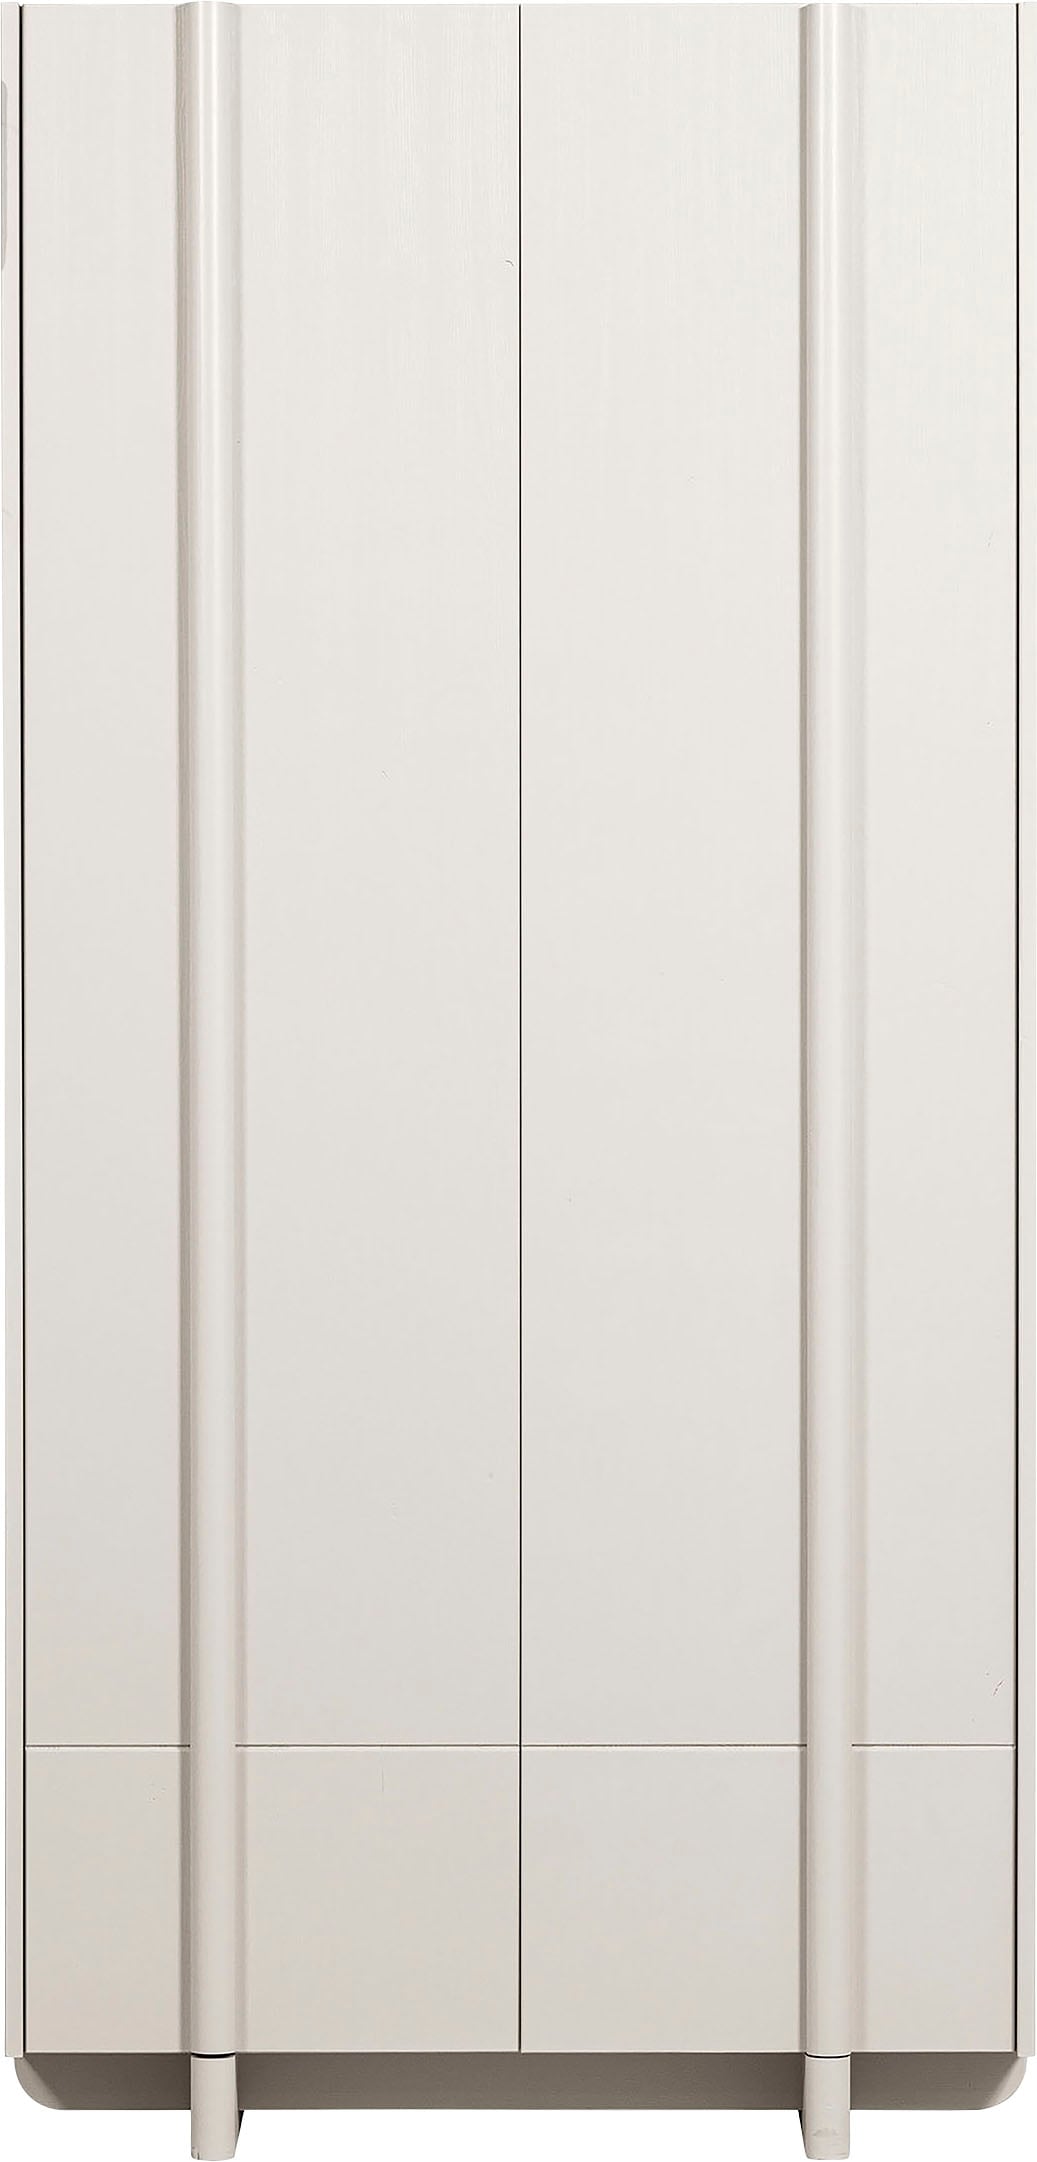 Garderobenschrank, H 210 cm x B 101 cm x T 46 cm